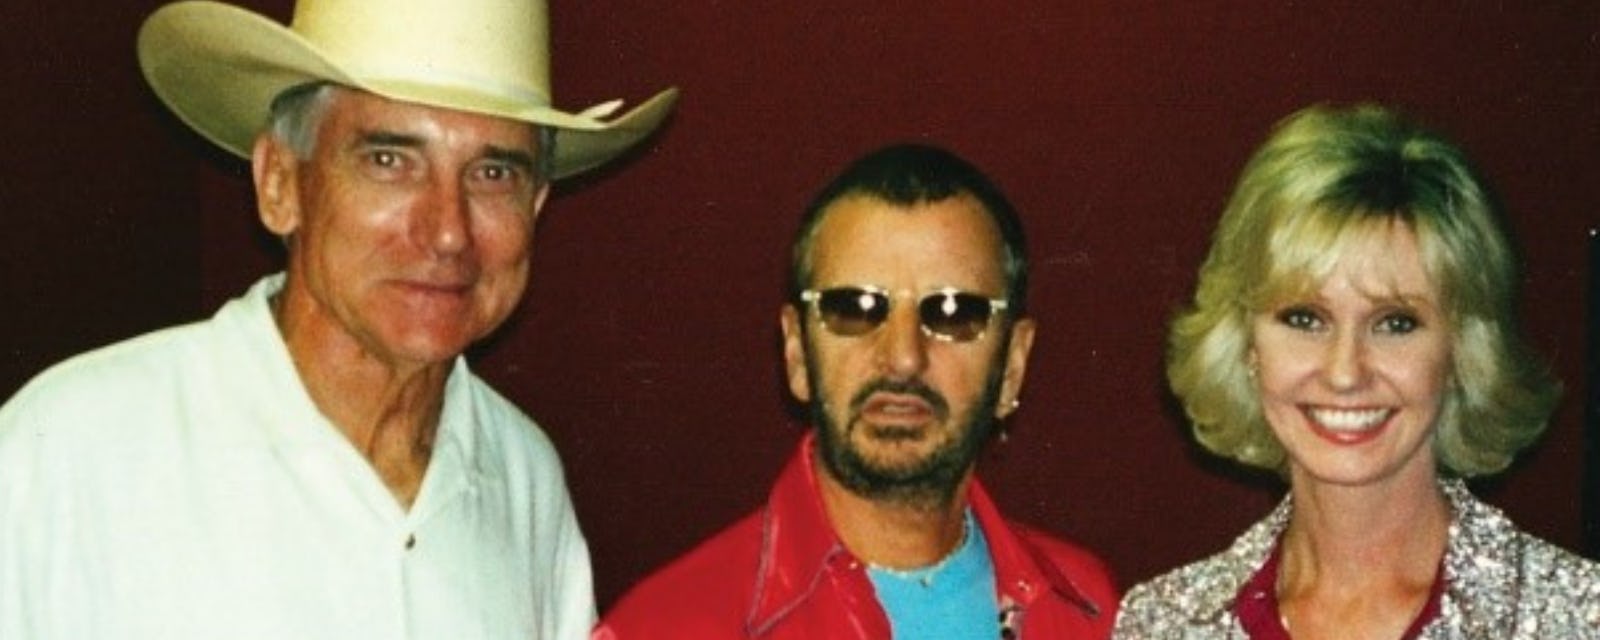 Hall of Fame Ringo Starr – Bob's Big Boy Burbank